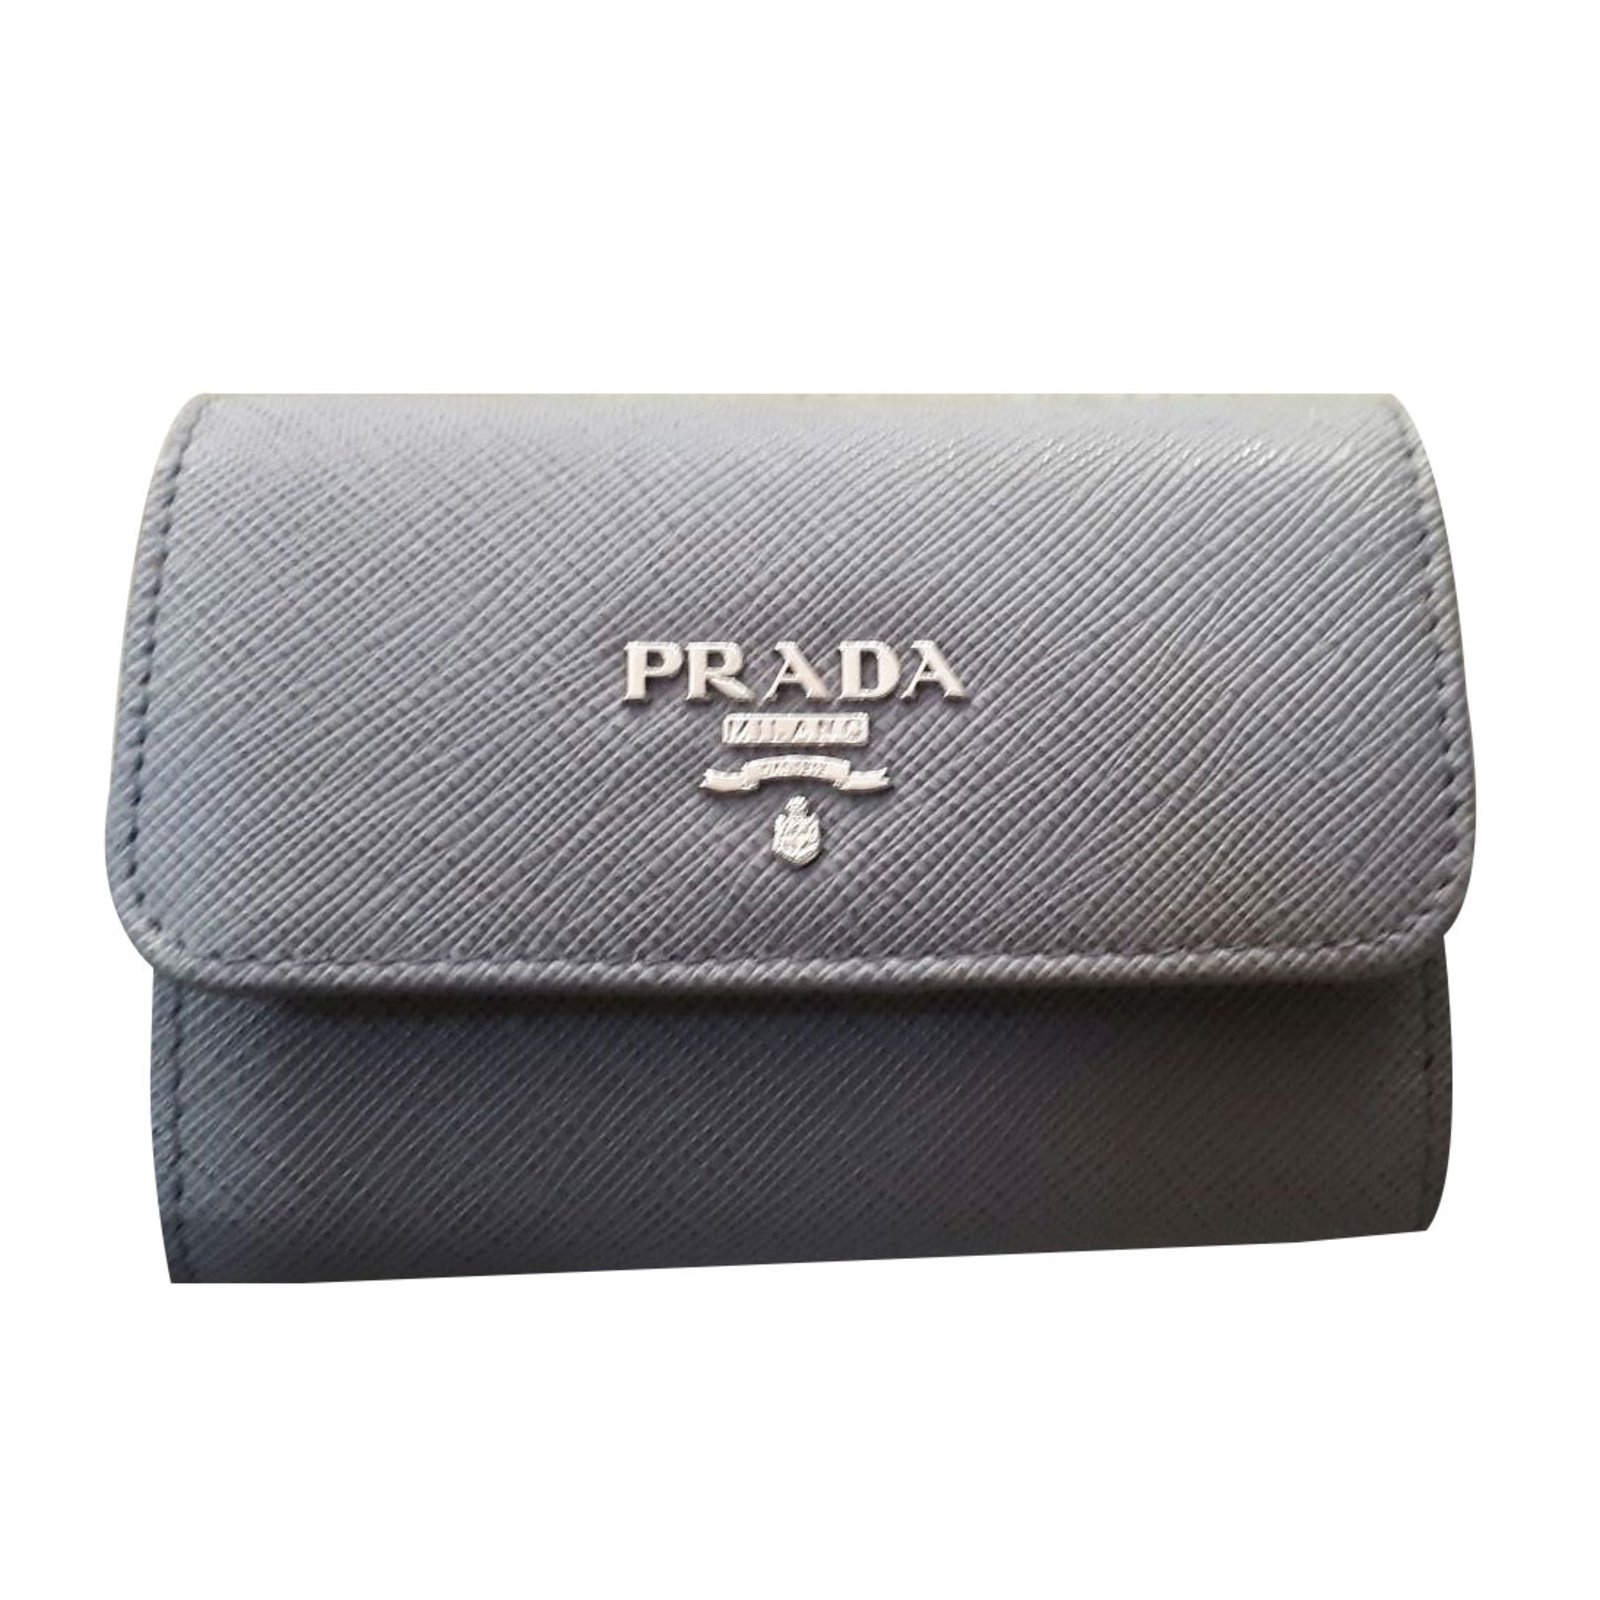 Prada Wallets Wallets Leather Grey ref 